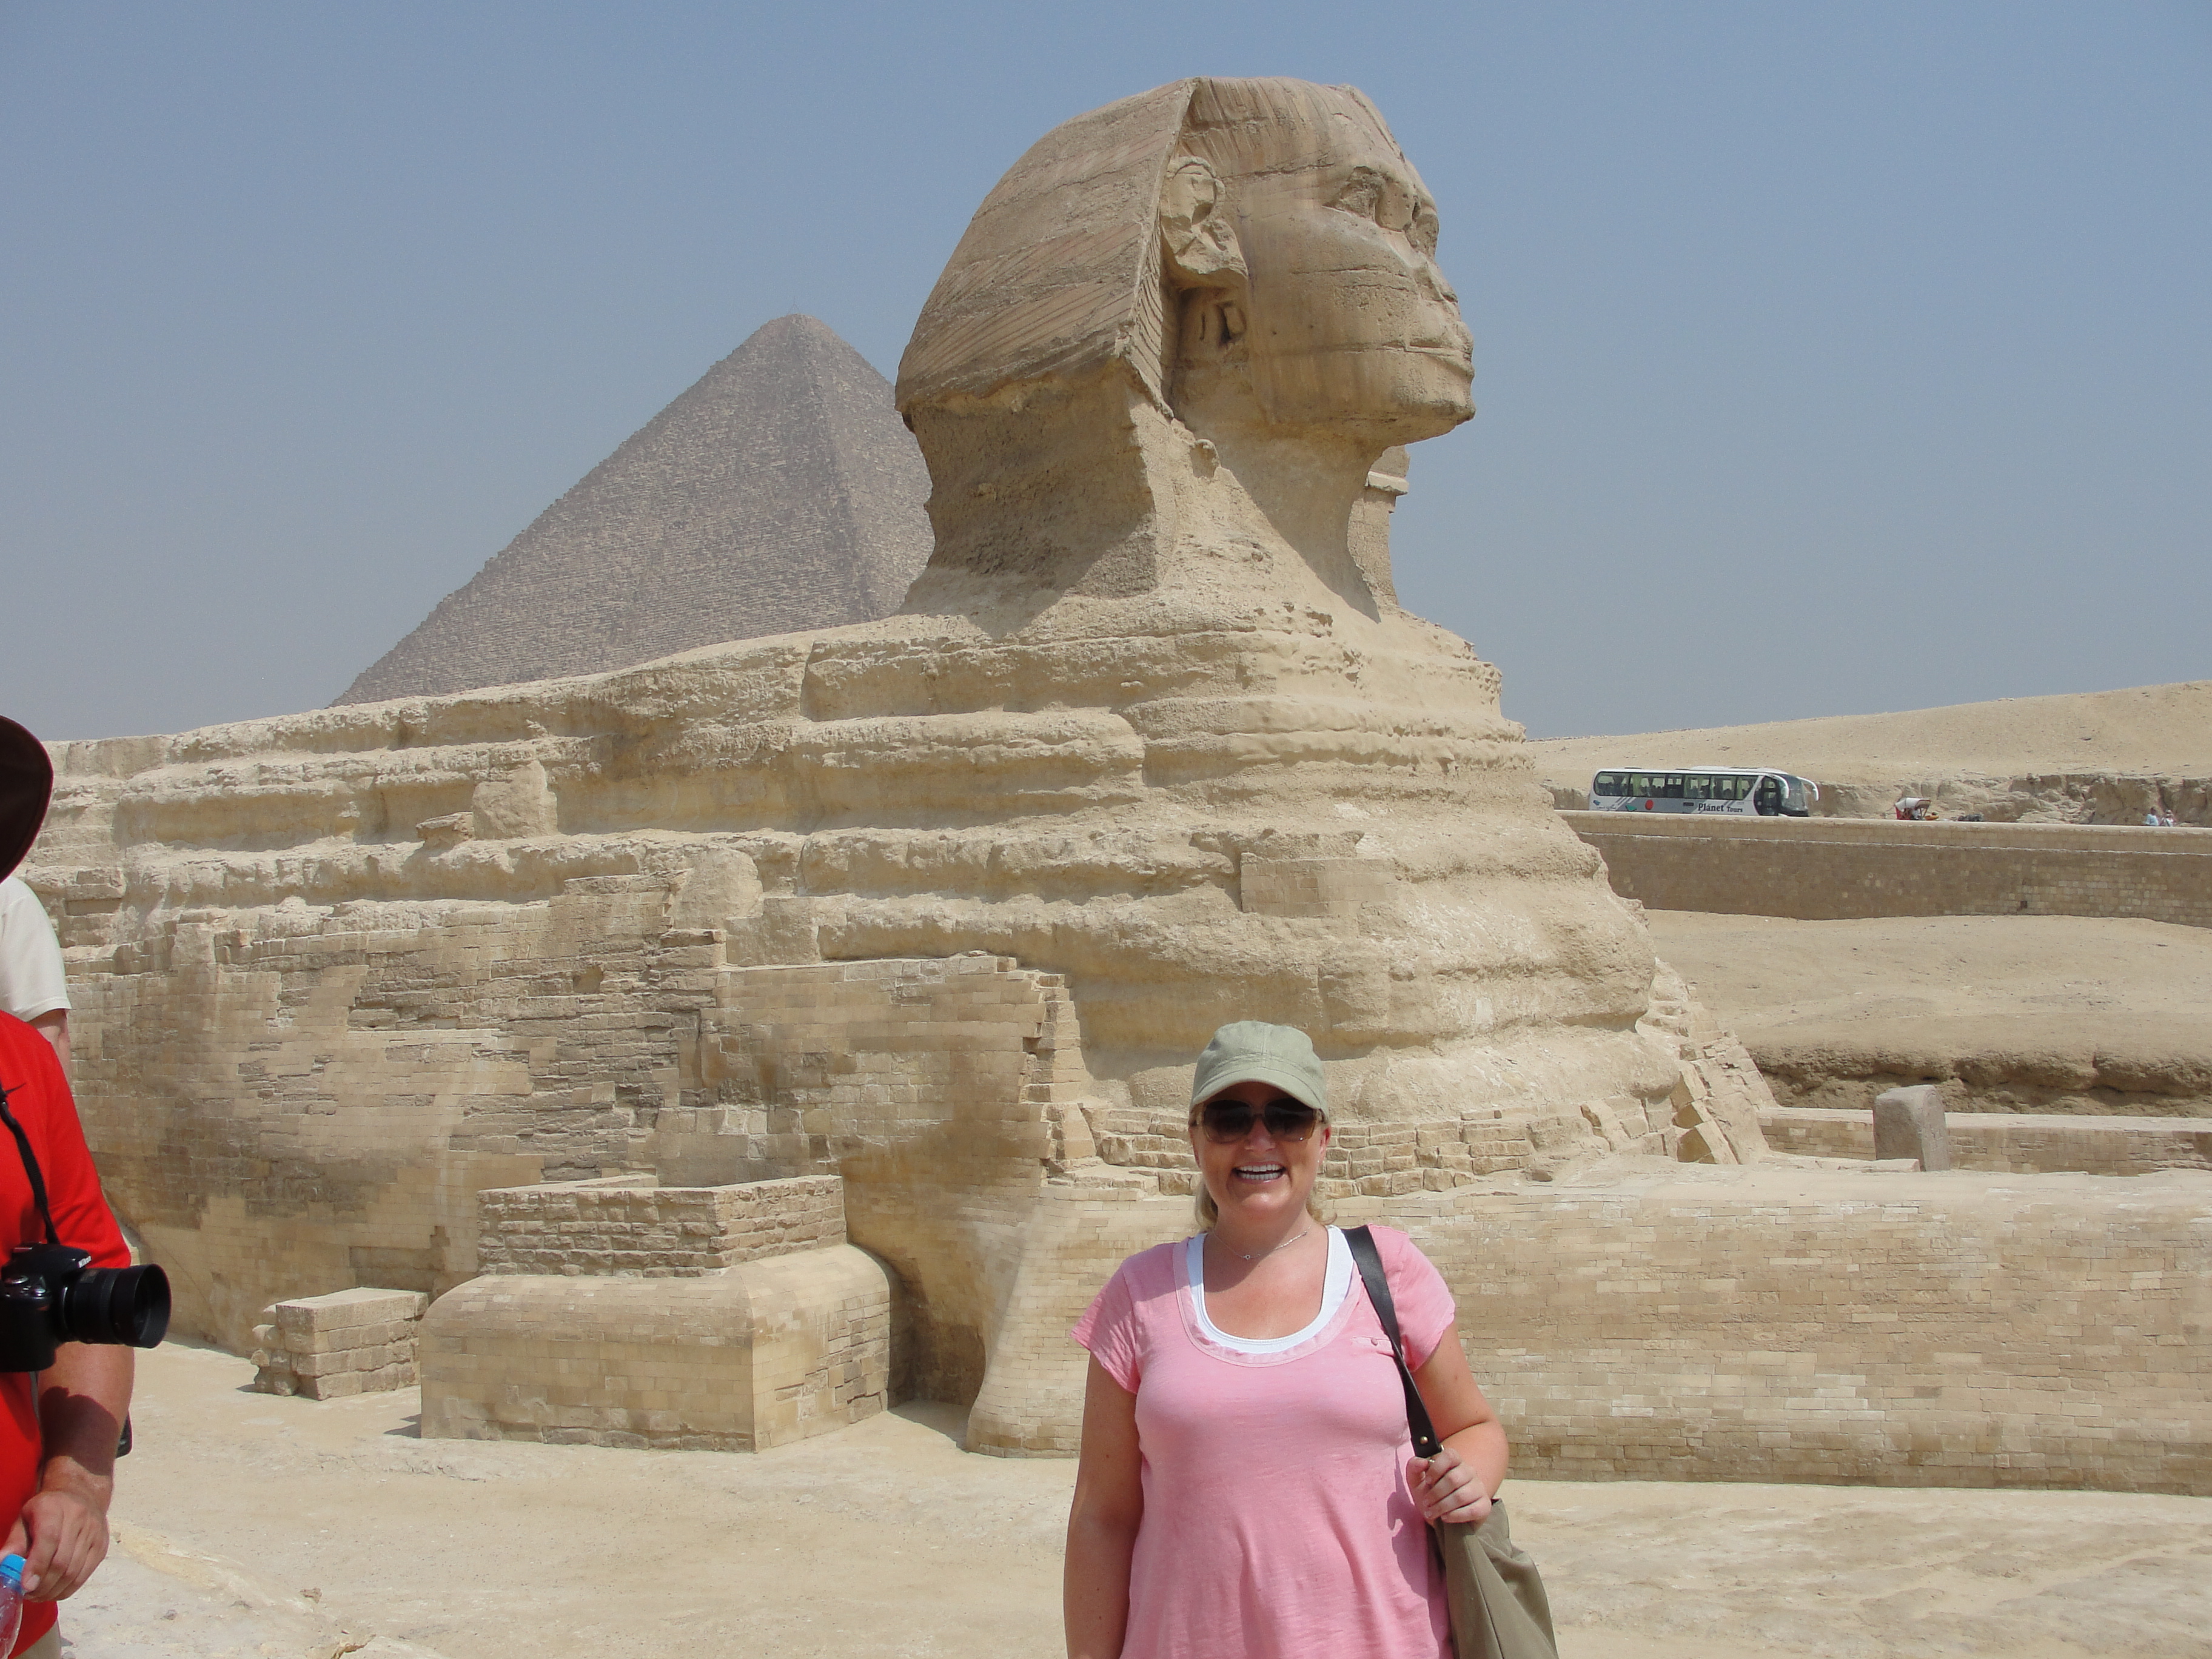 Heidi in front of the Sphinx